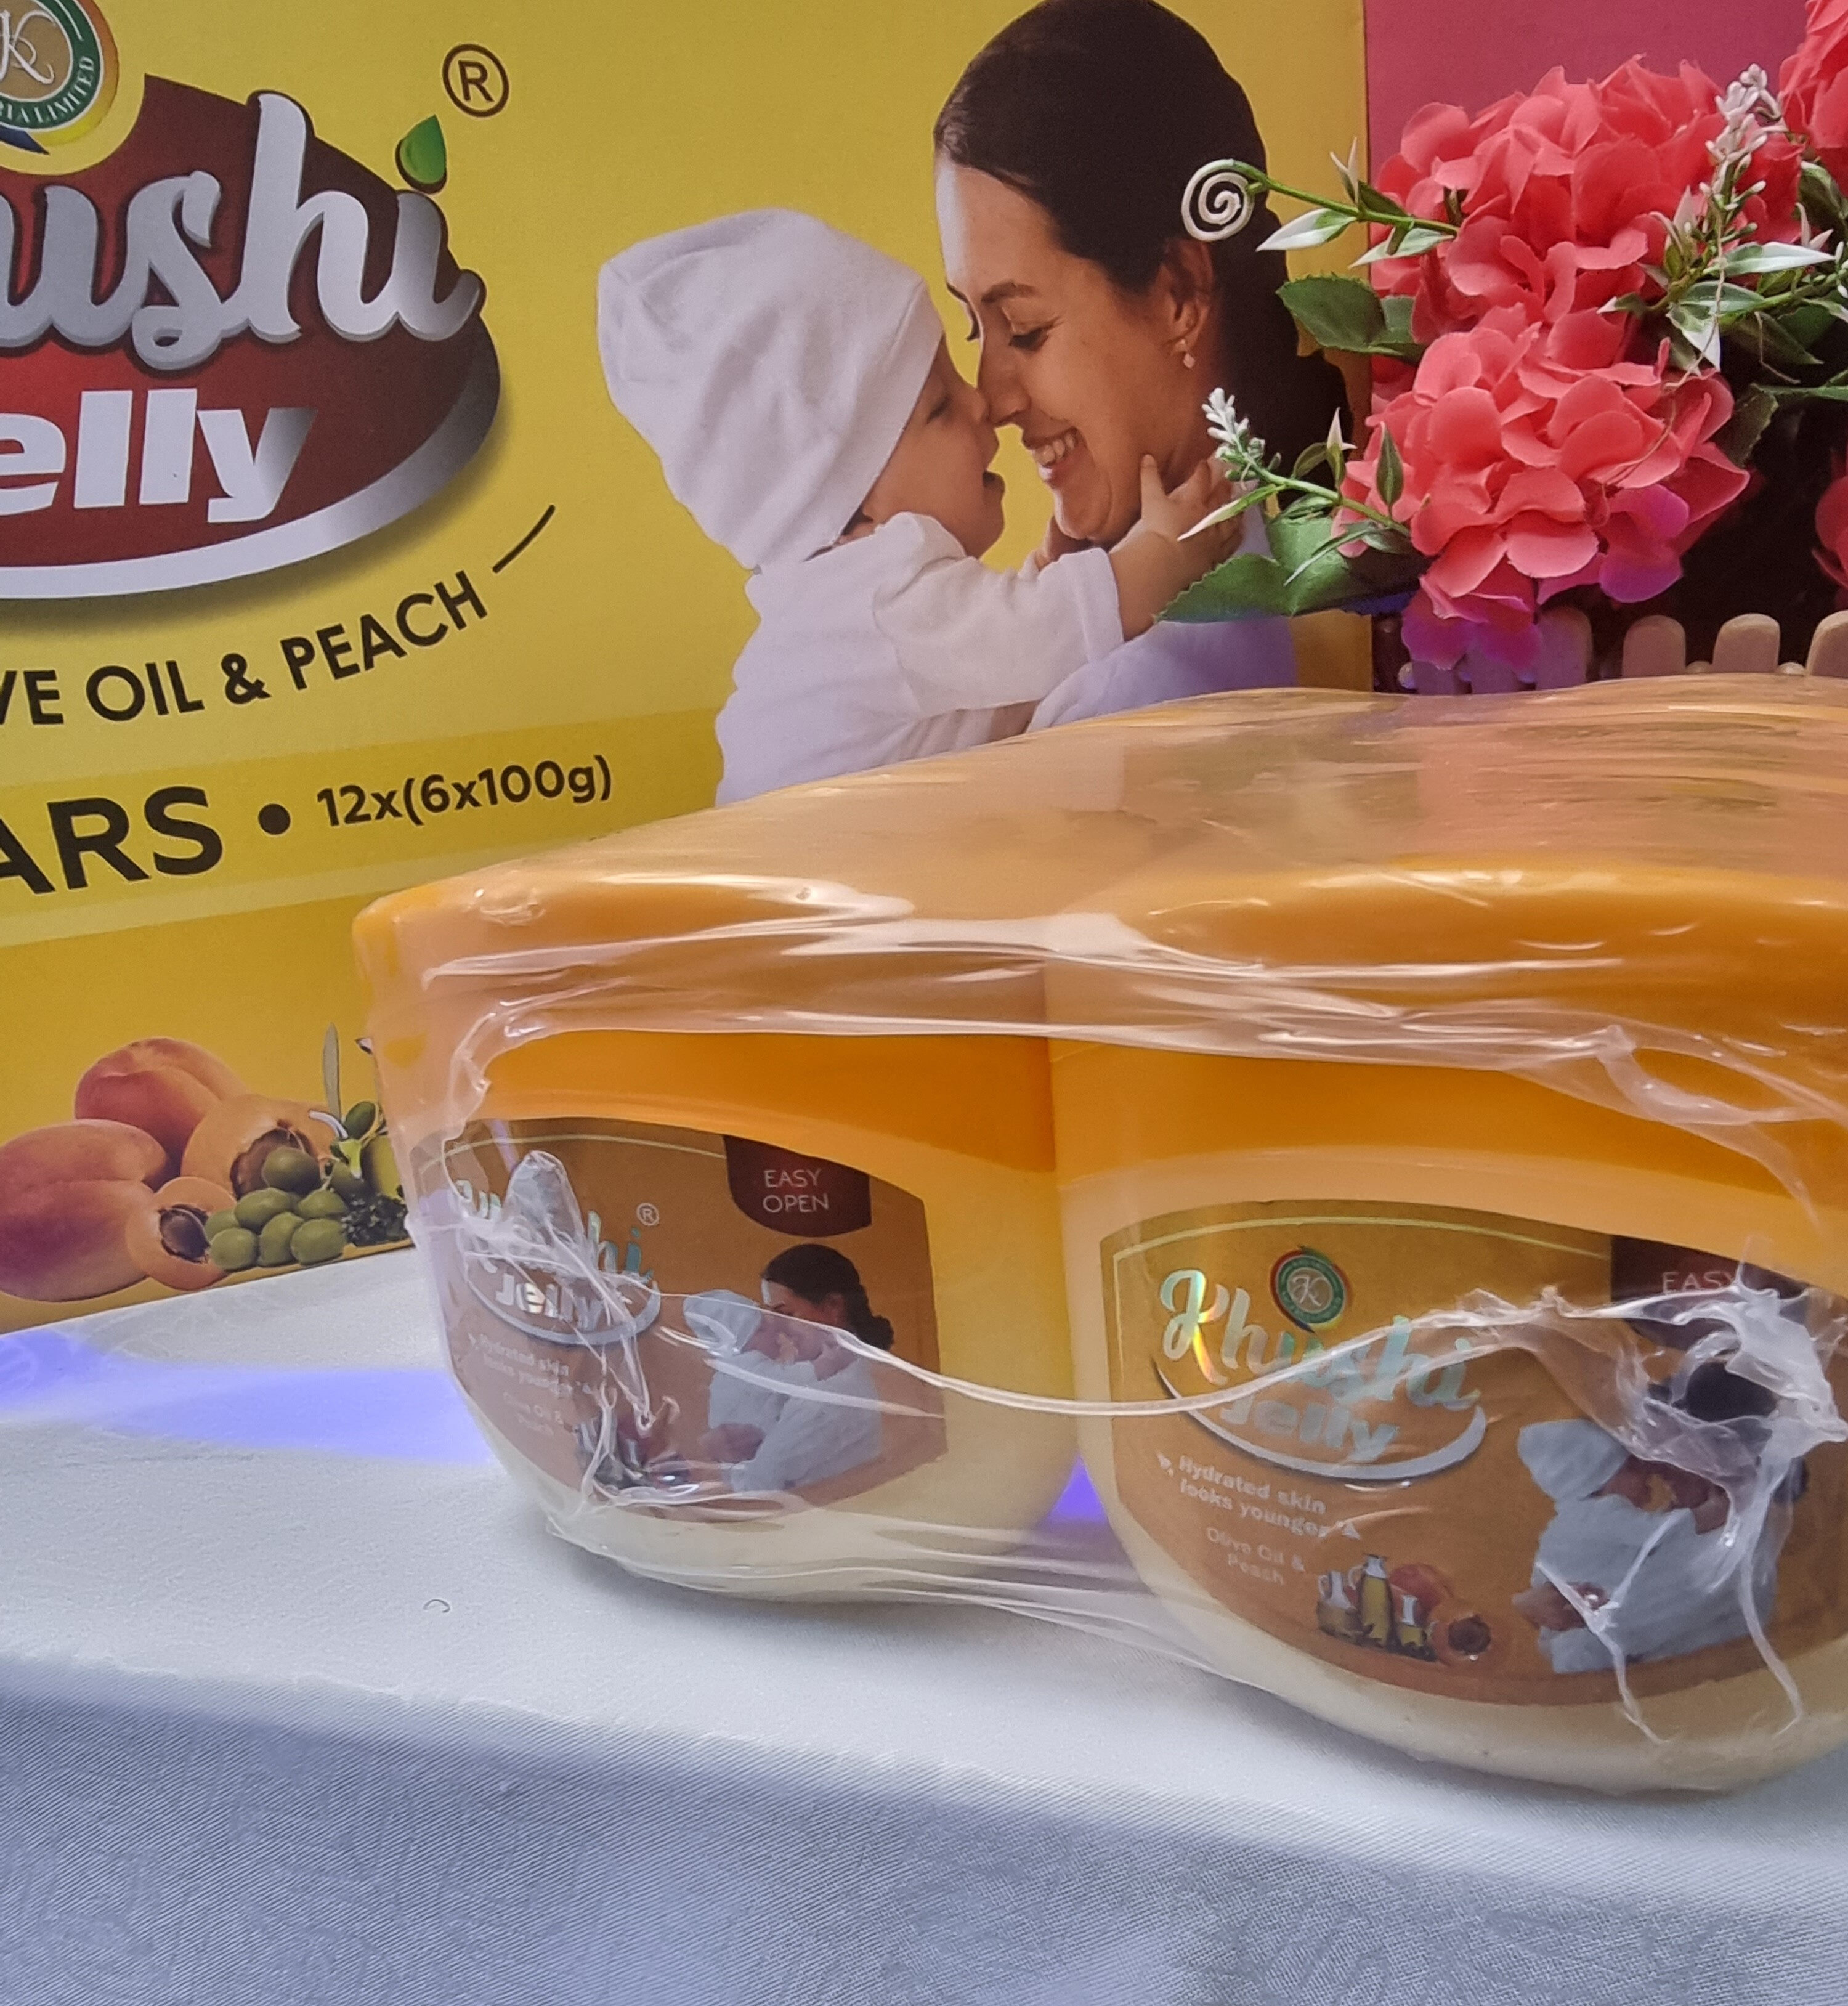 khushi Jelly - Product - en